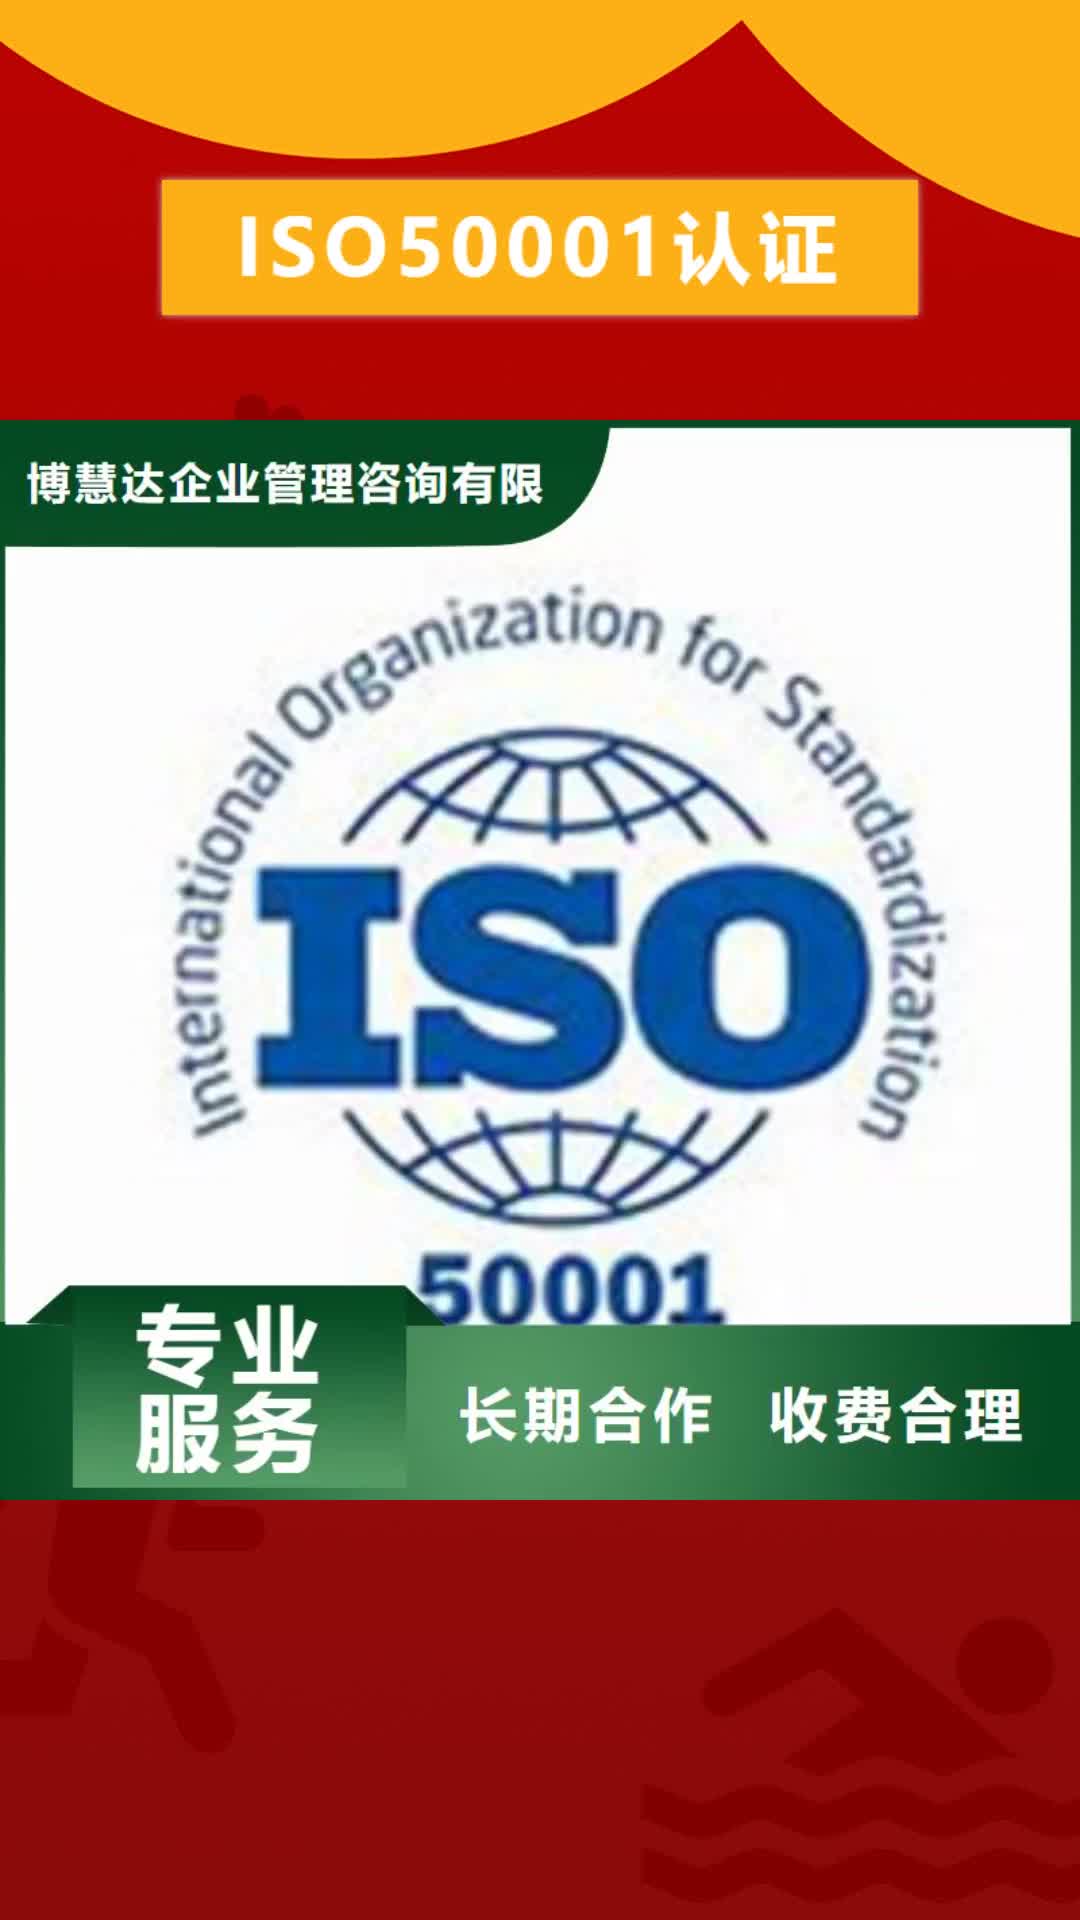 【四平 ISO50001认证ISO10012认证知名公司】